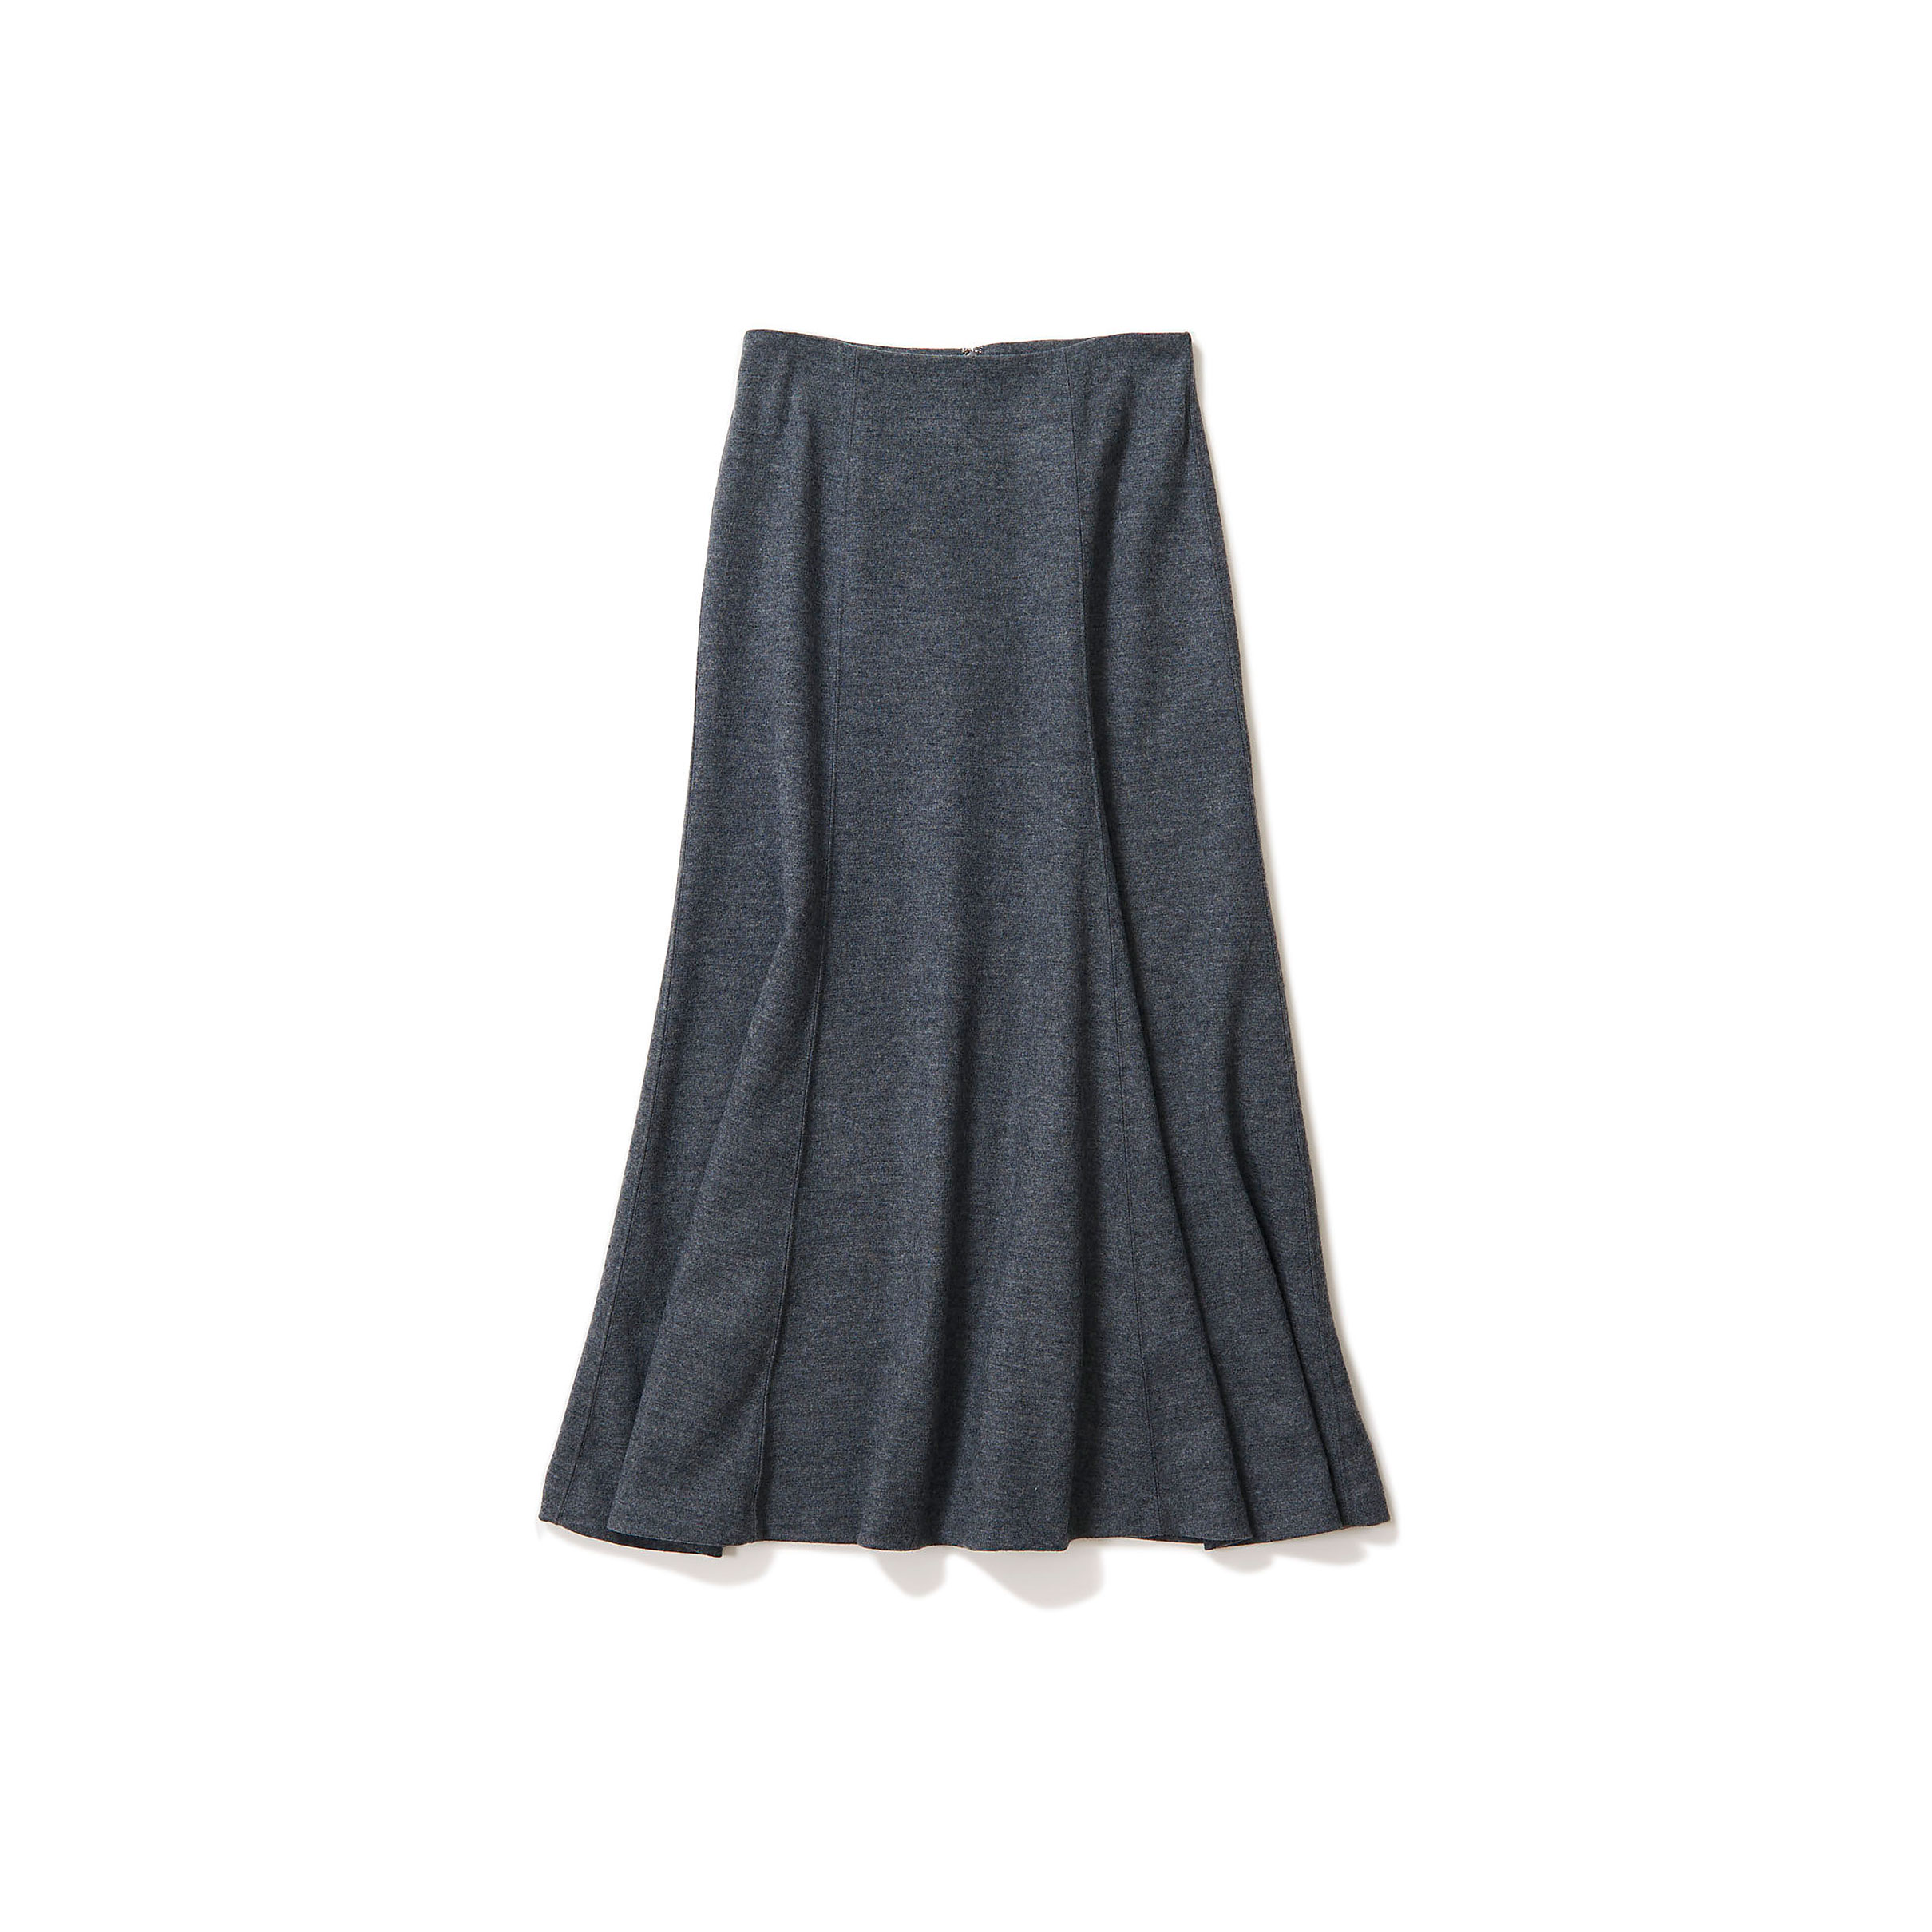 comfy & elegant gray jersey skirt